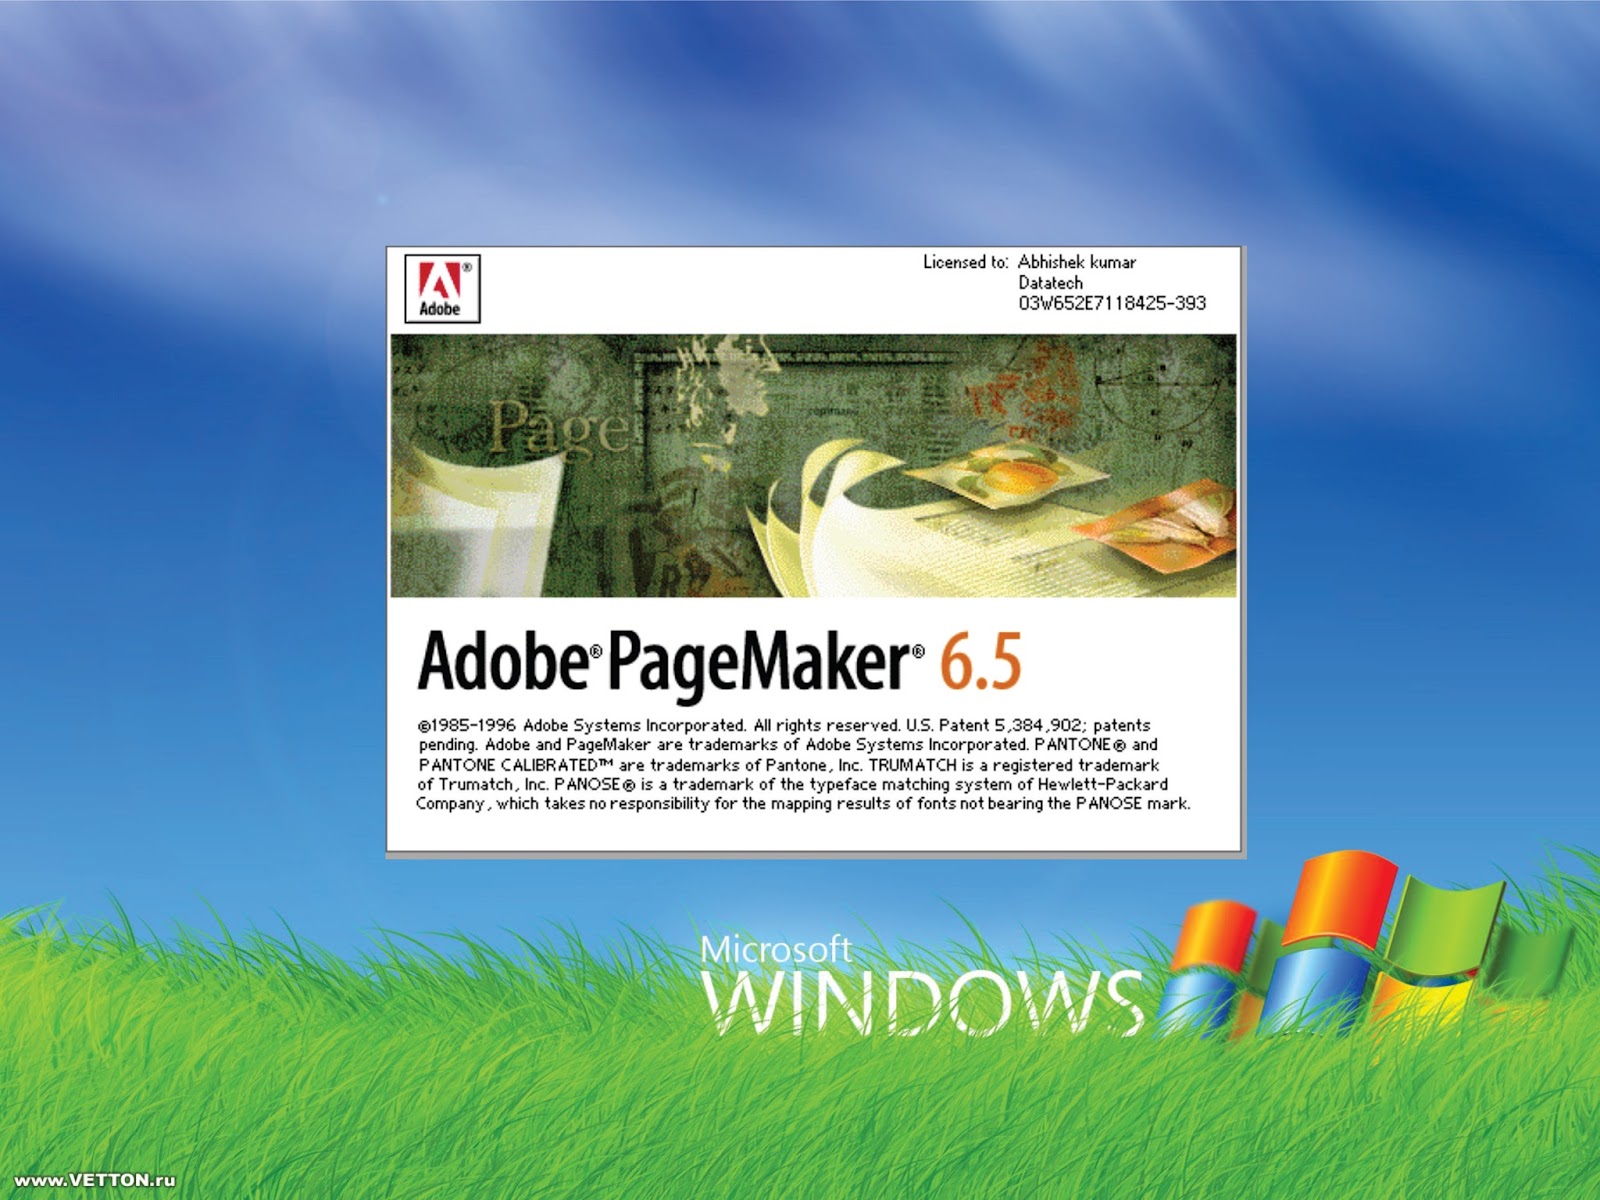 Adobe pagemaker free download